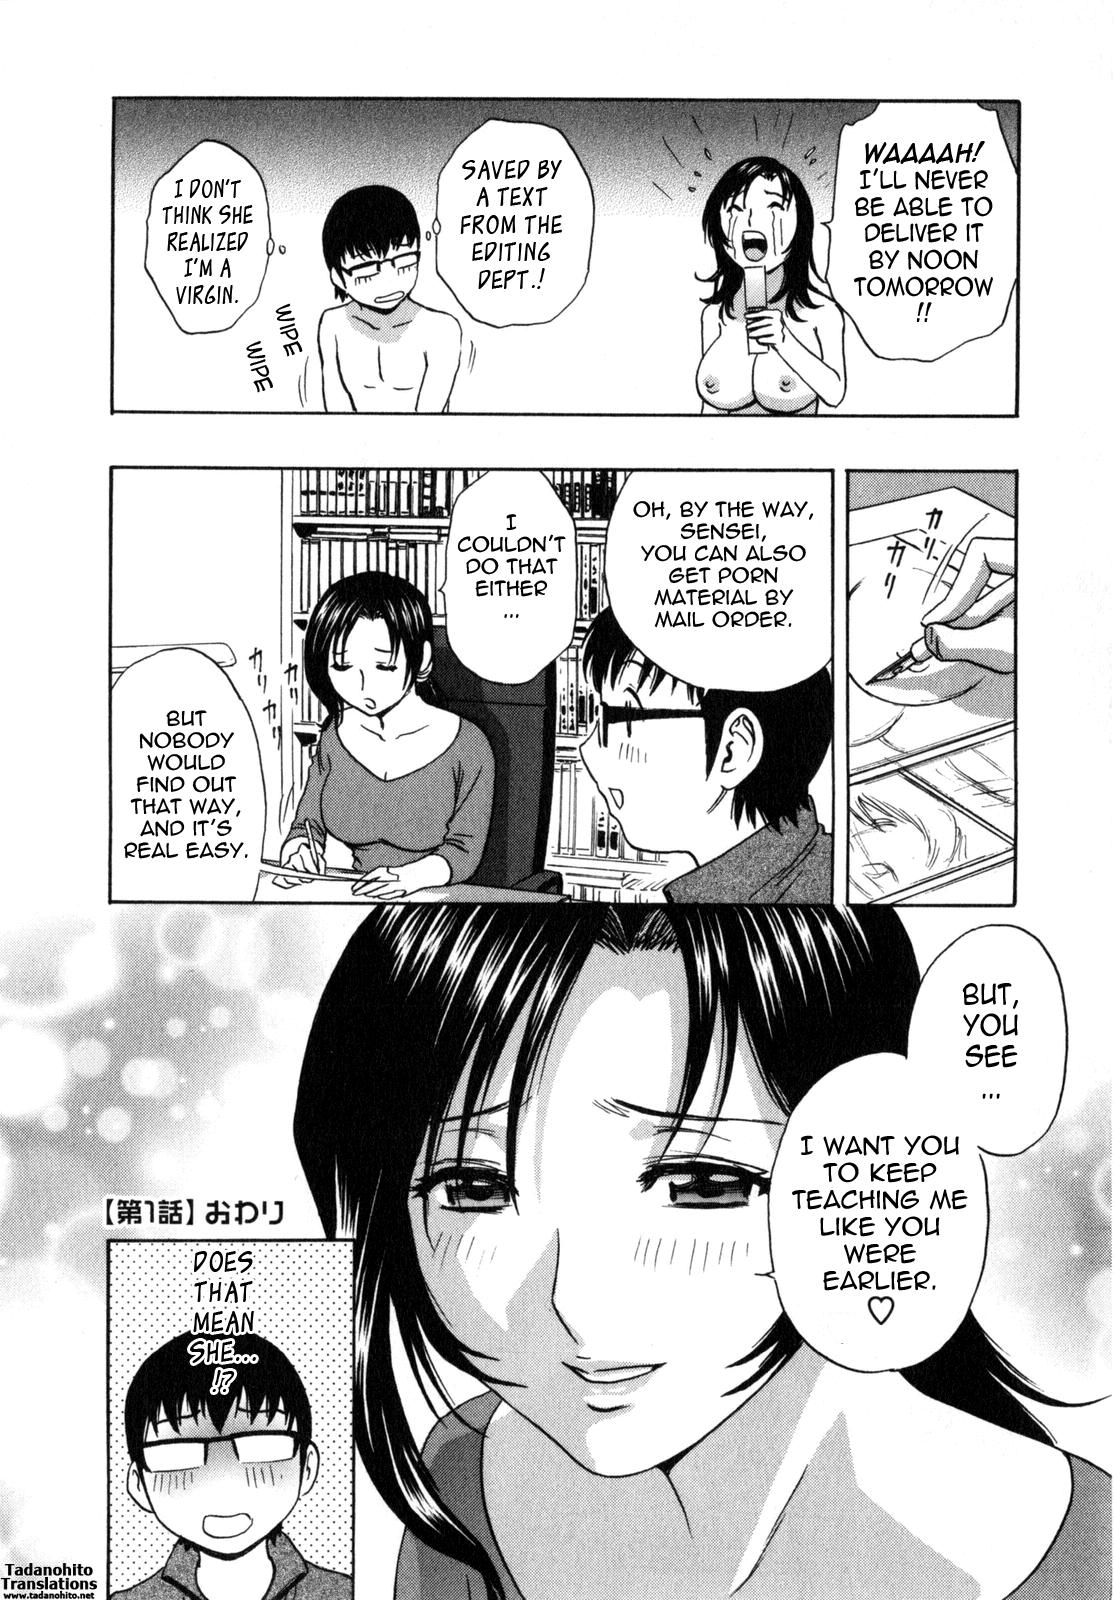 [Hidemaru] Life with Married Women Just Like a Manga 1 - Ch. 1-3 [English] {Tadanohito} 24